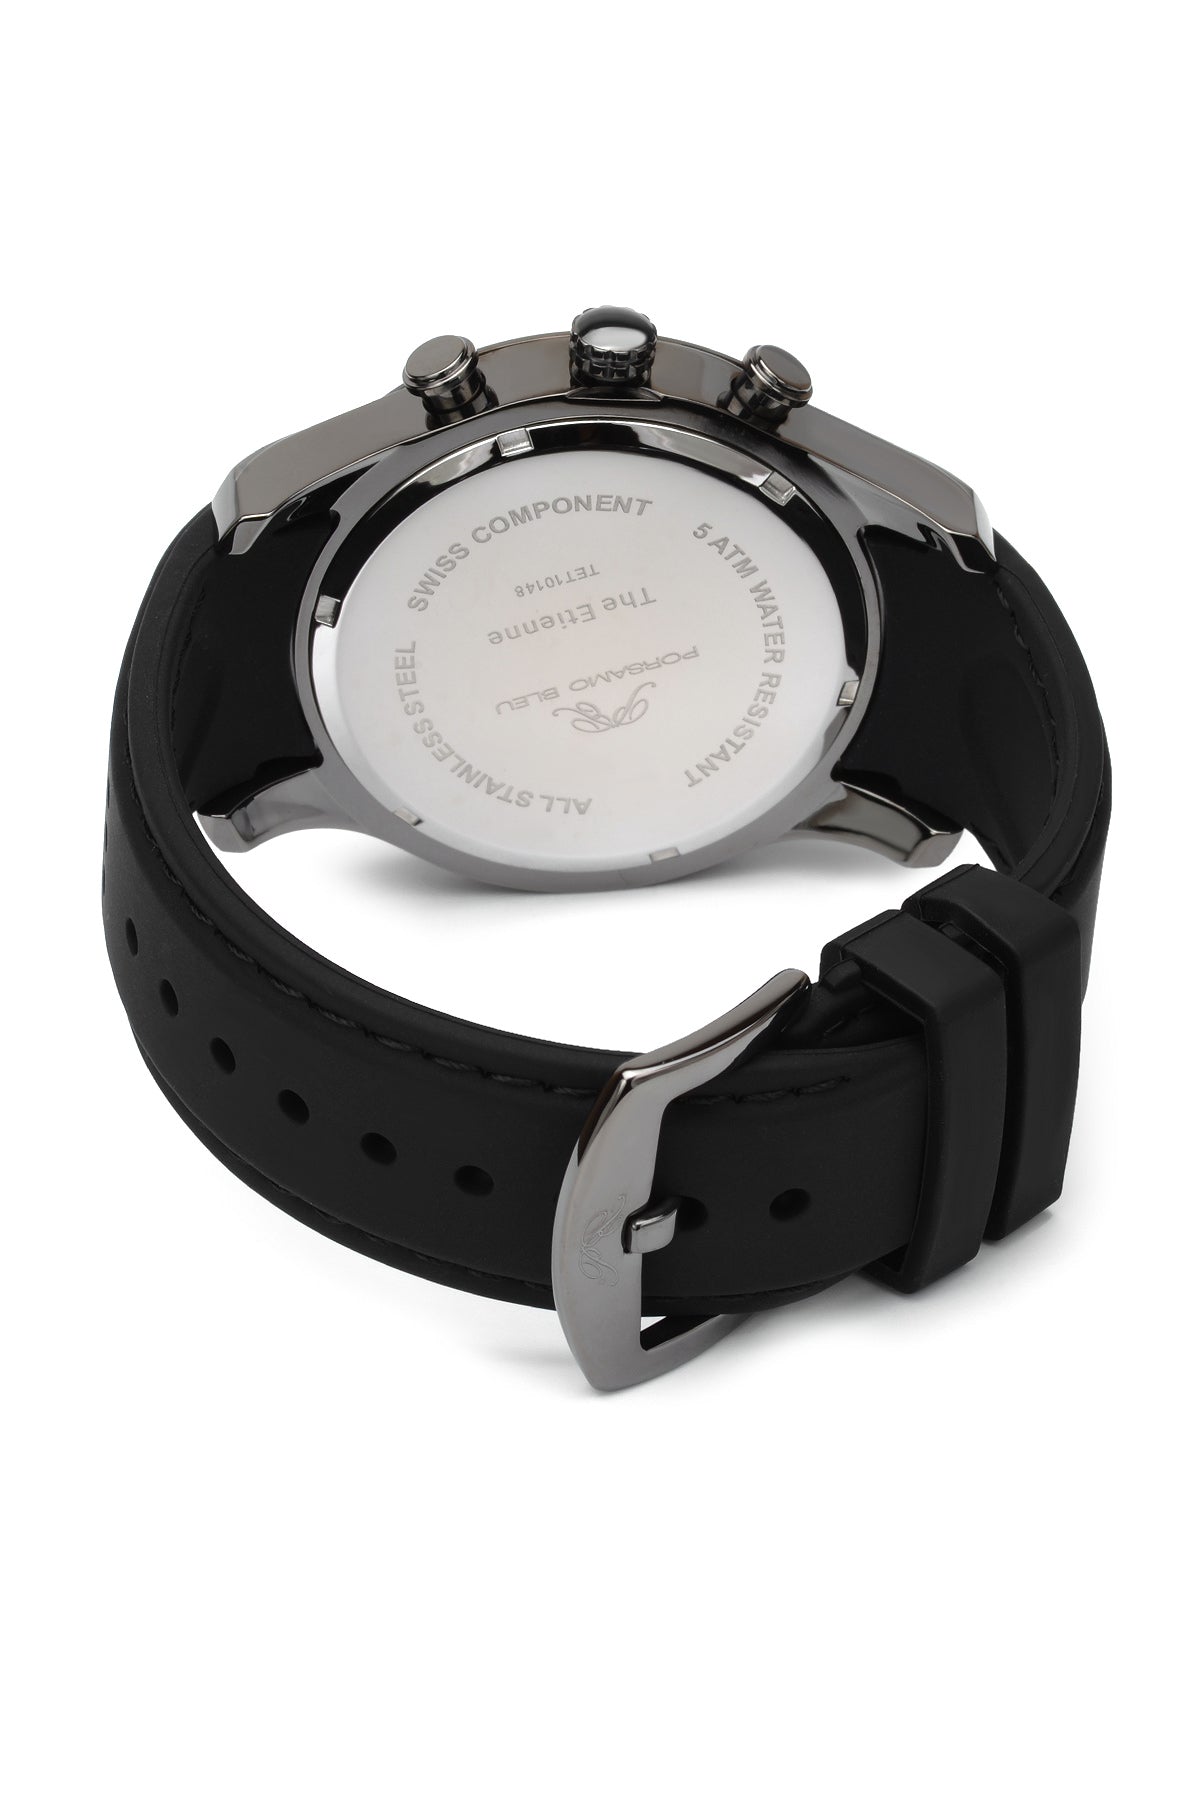 Porsamo Bleu Etienne luxury men's watch, silicone strap, gunmetal, black 213CETR